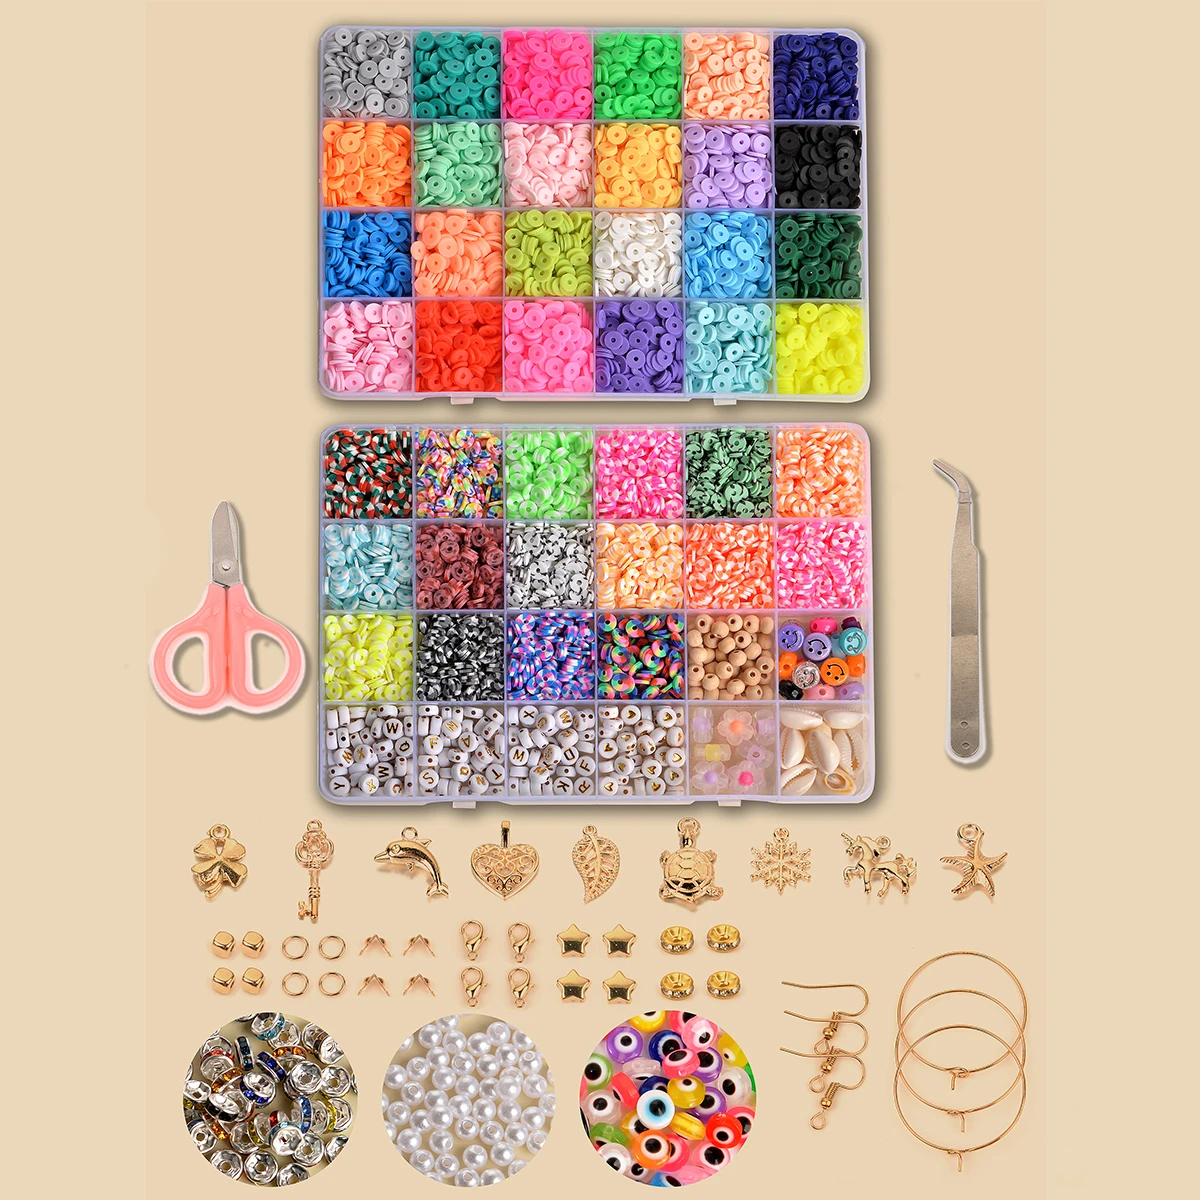 MODDA Jewelry Making Supplies - Jewelry Making Kits for Adults